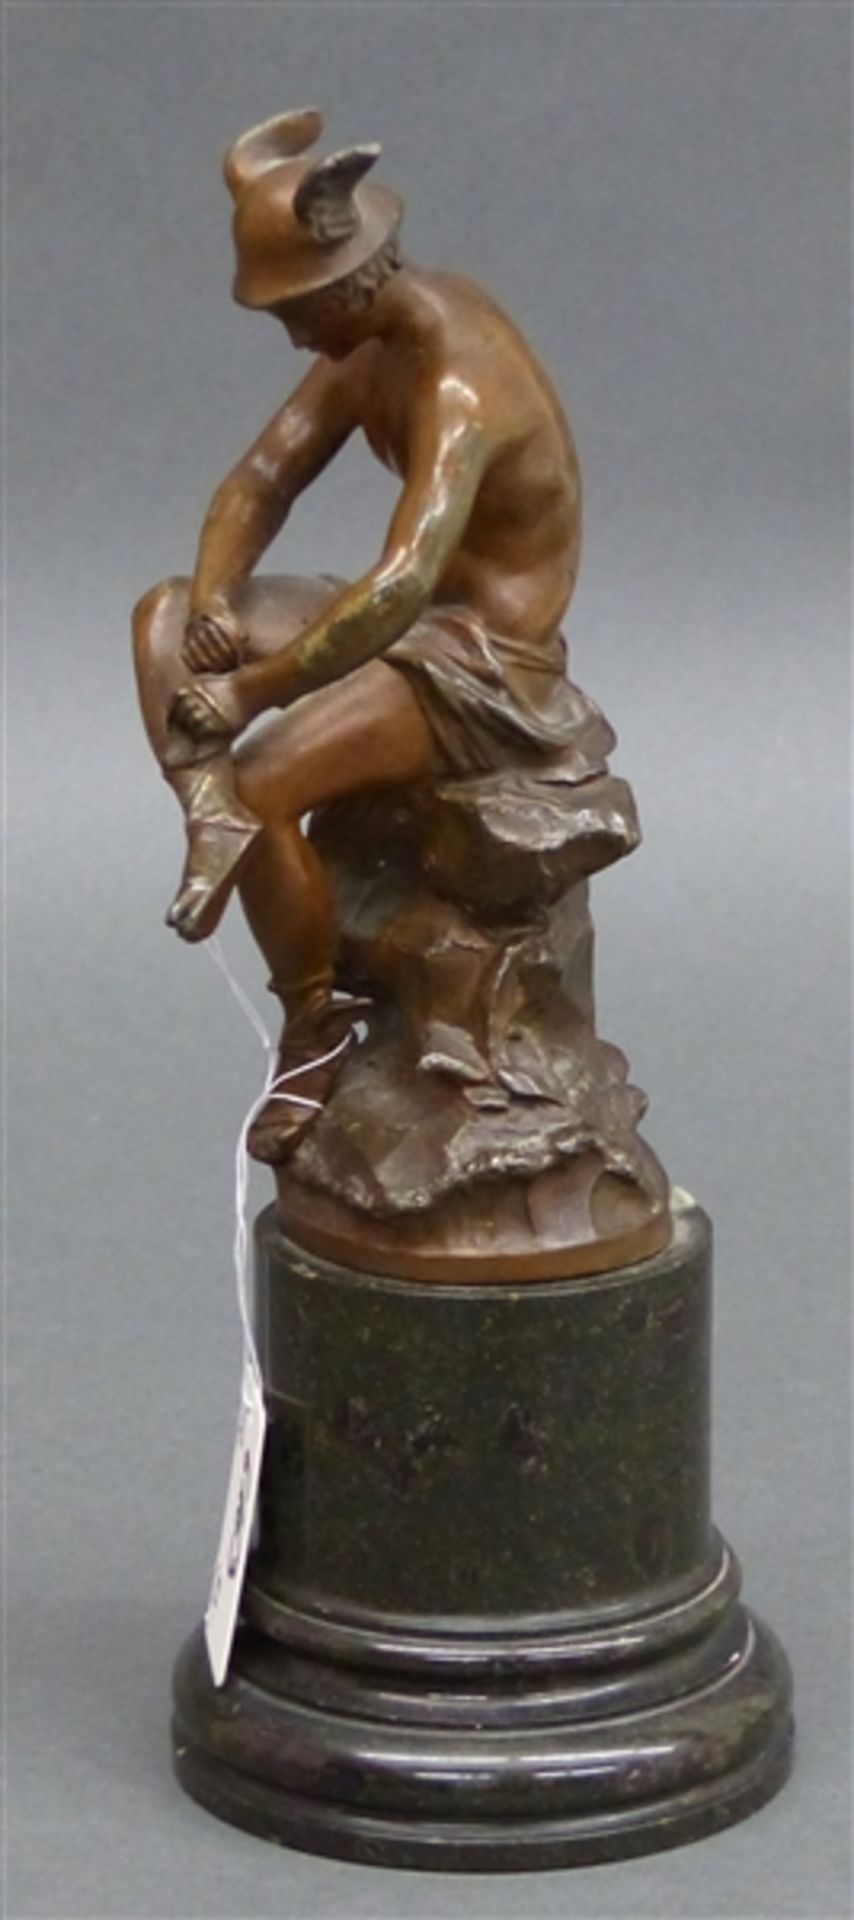 Götterskulptur, um 1900 Metallguss, braune Patina, "Hermes", auf Marmorsockel, h kpl. 18 cm,